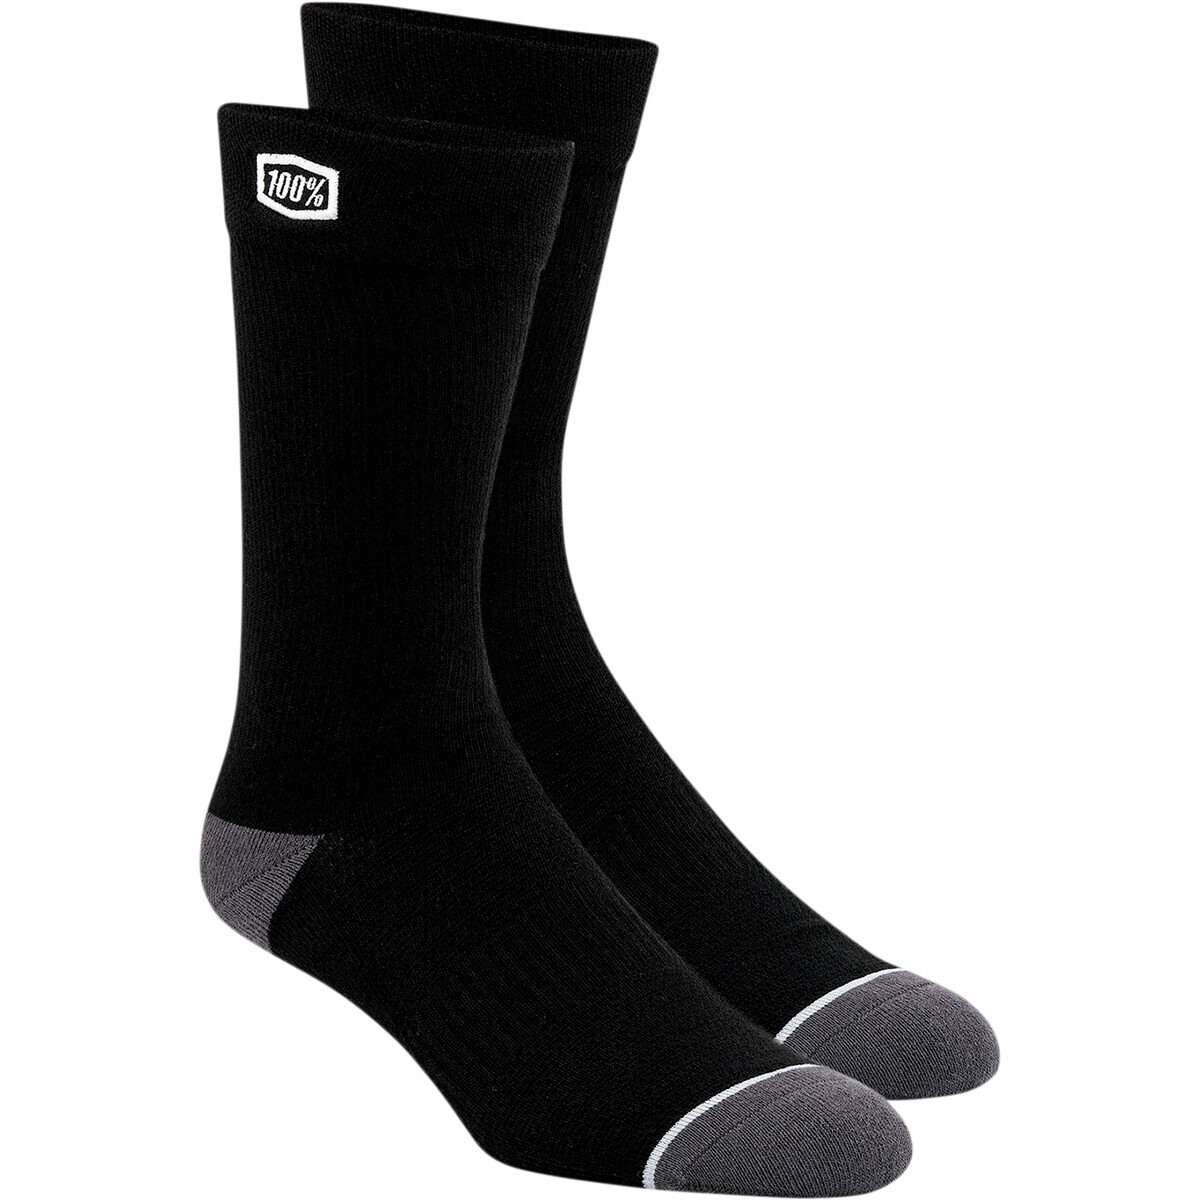 100% Solid Socks Black